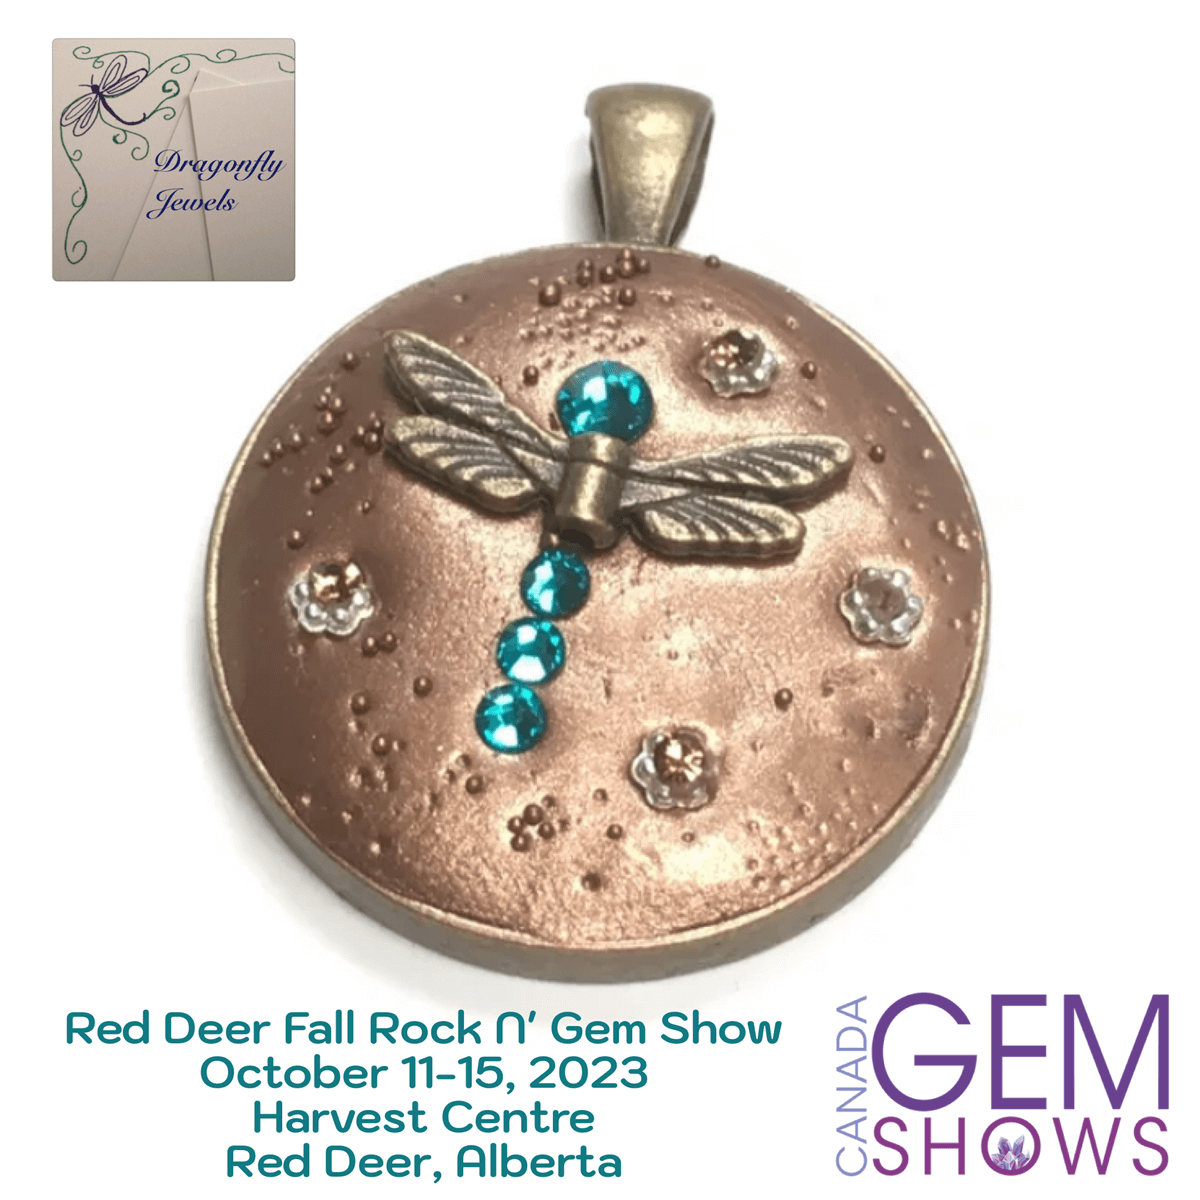 Red Deer Fall Rock N' Gem Show 2023